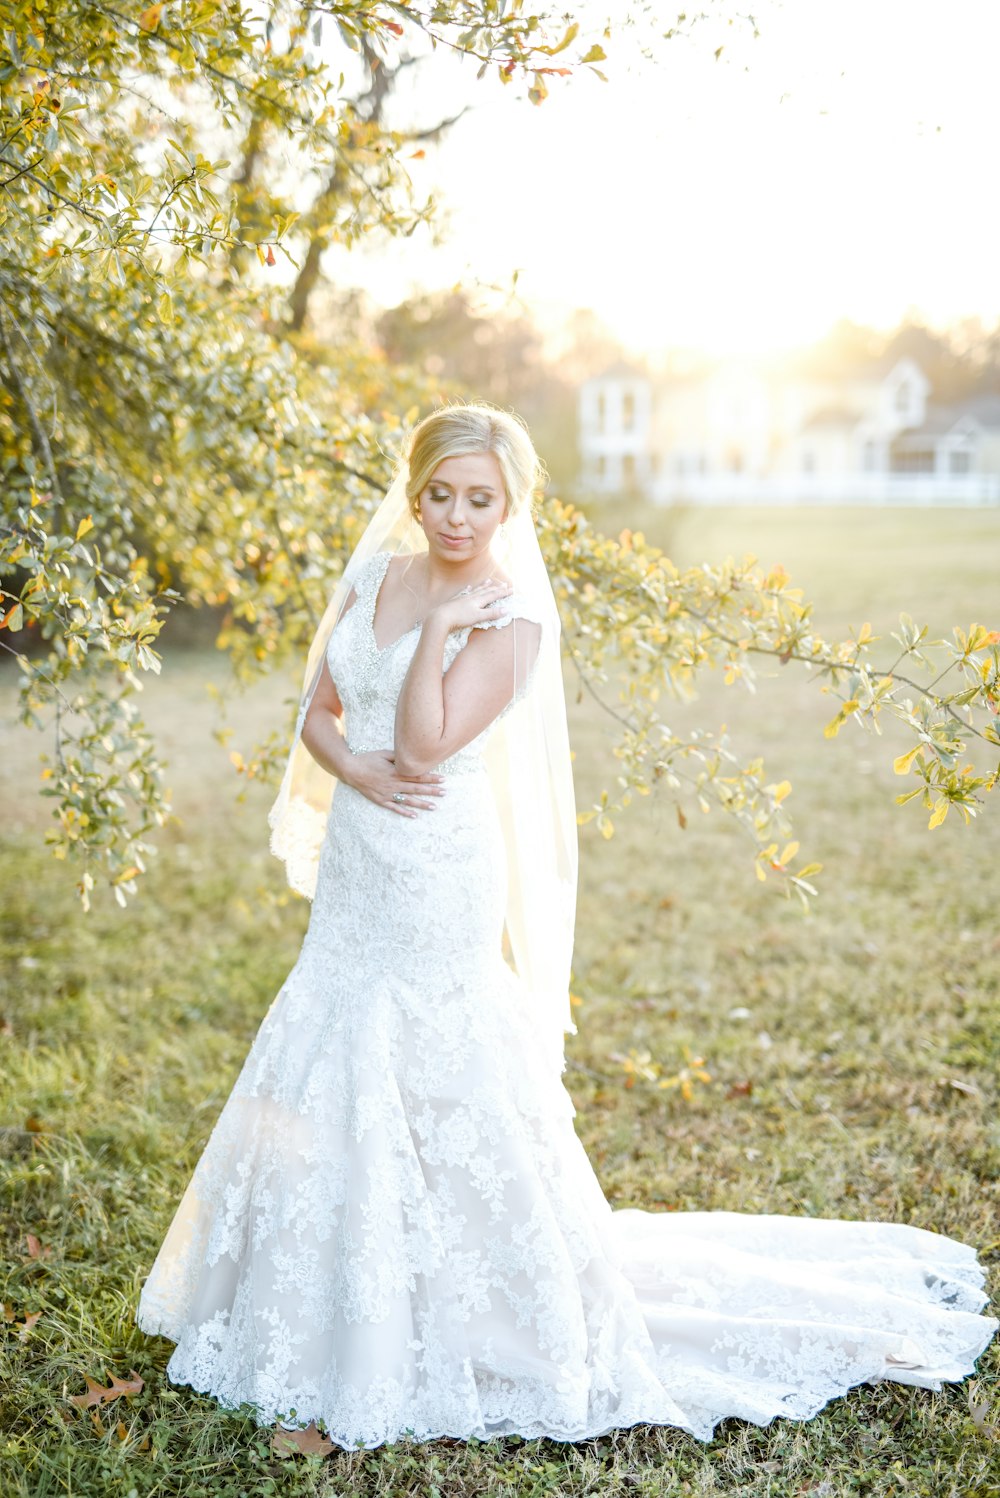 woman wearing white wedding dress near green leaf tree outdoors